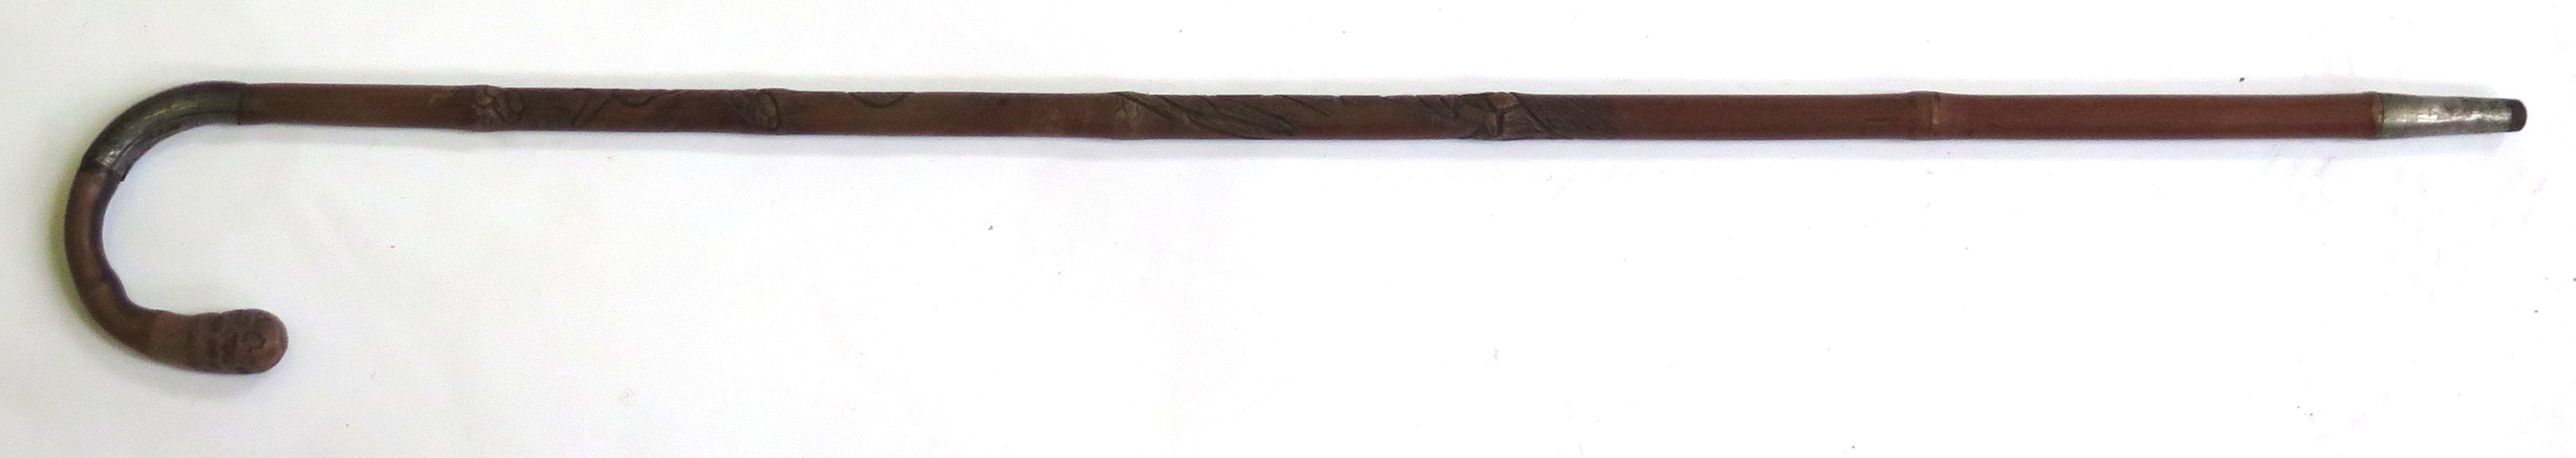 Käpp, bambu med silver(?)montage, antagligen Kina, sekelskiftet 1900,_13788a_lg.jpeg